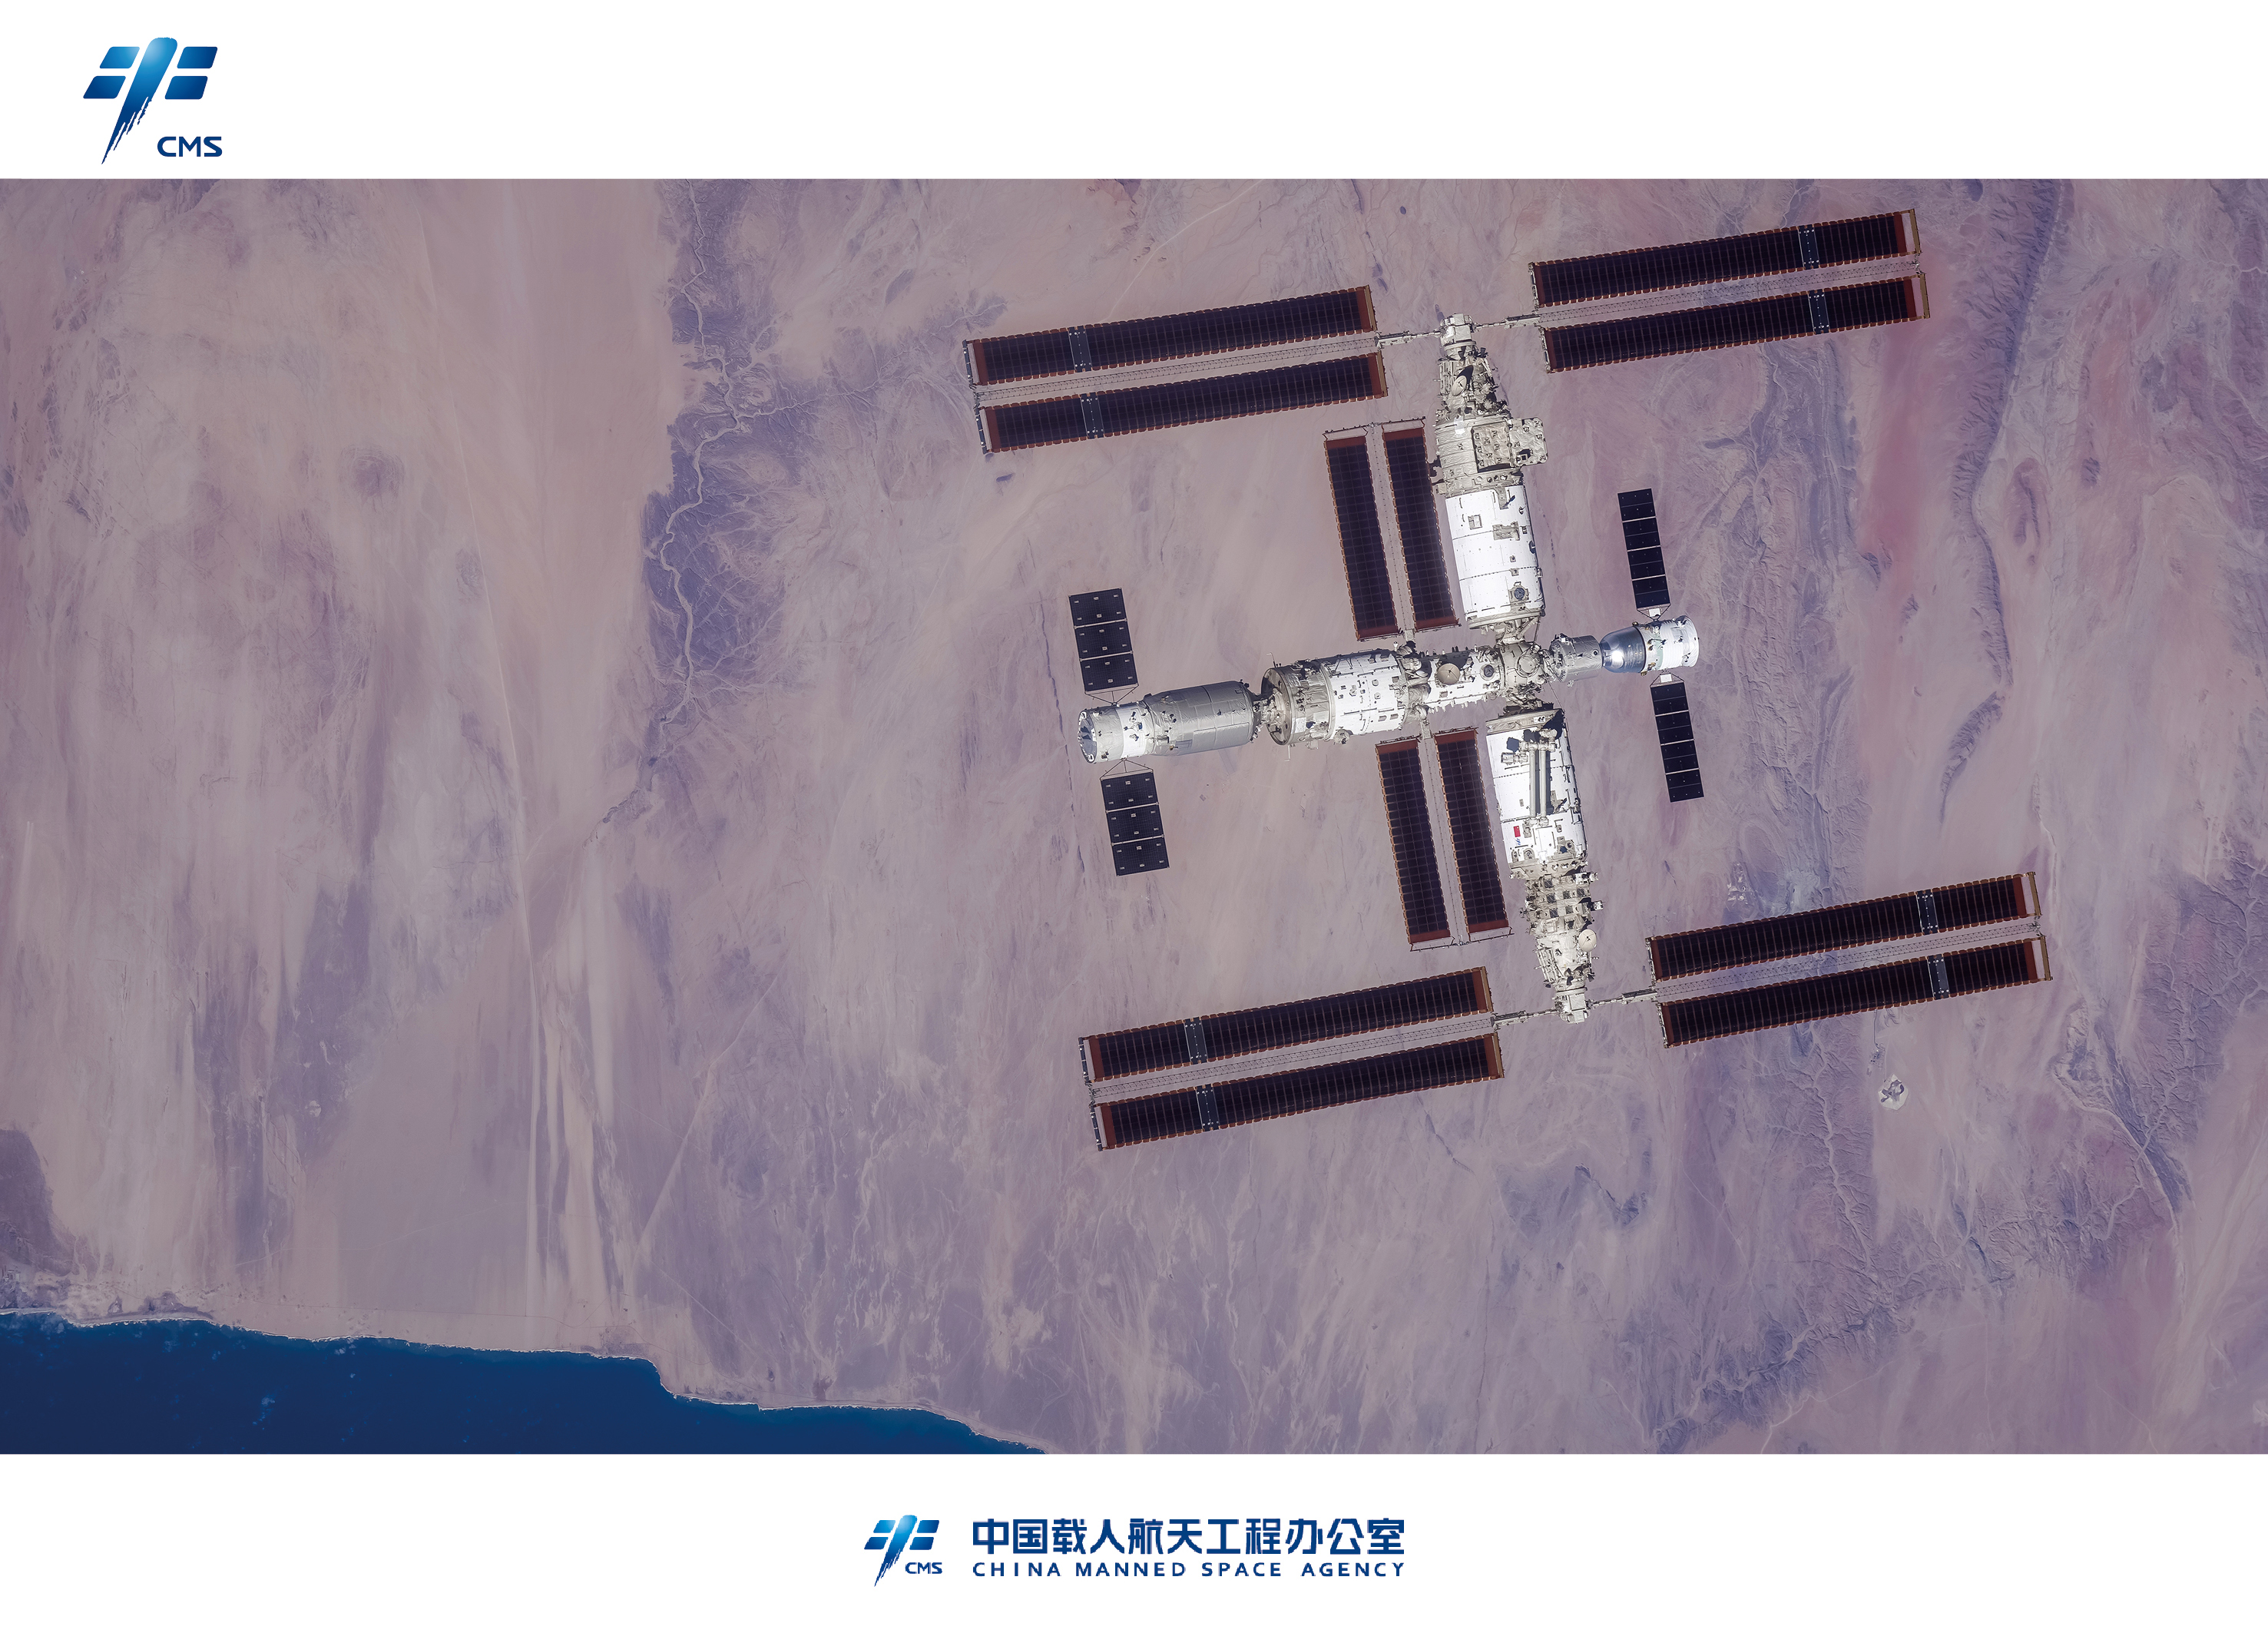 China Rilis Gambar Stasiun Ruang Angkasa Resolusi Tinggi-Image-2